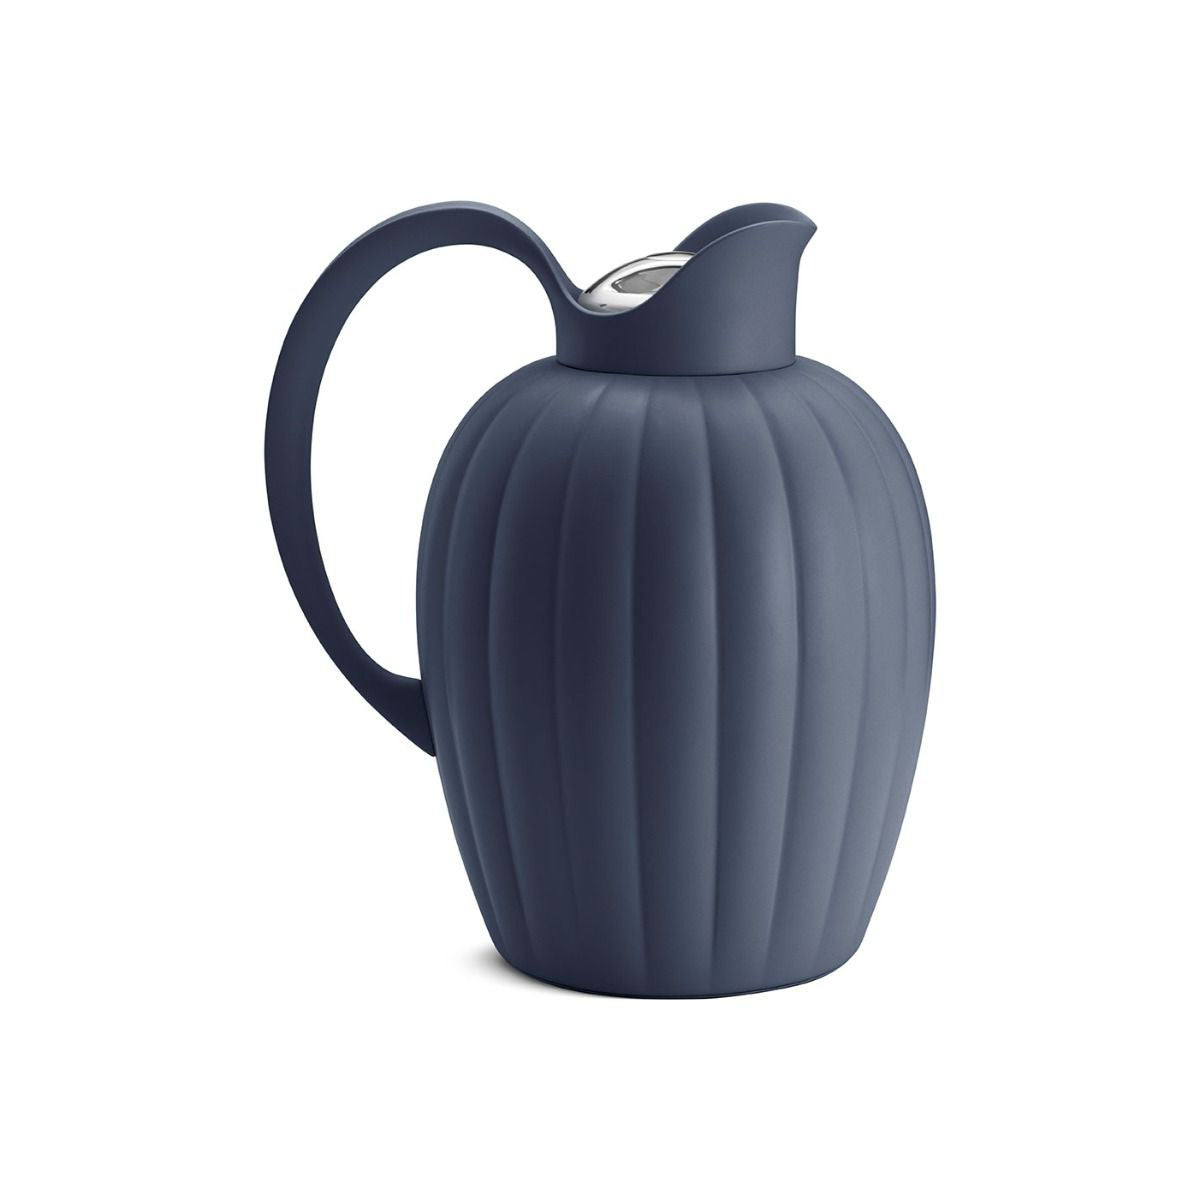 Bernadotte' thermo jug, large by Georg Jensen